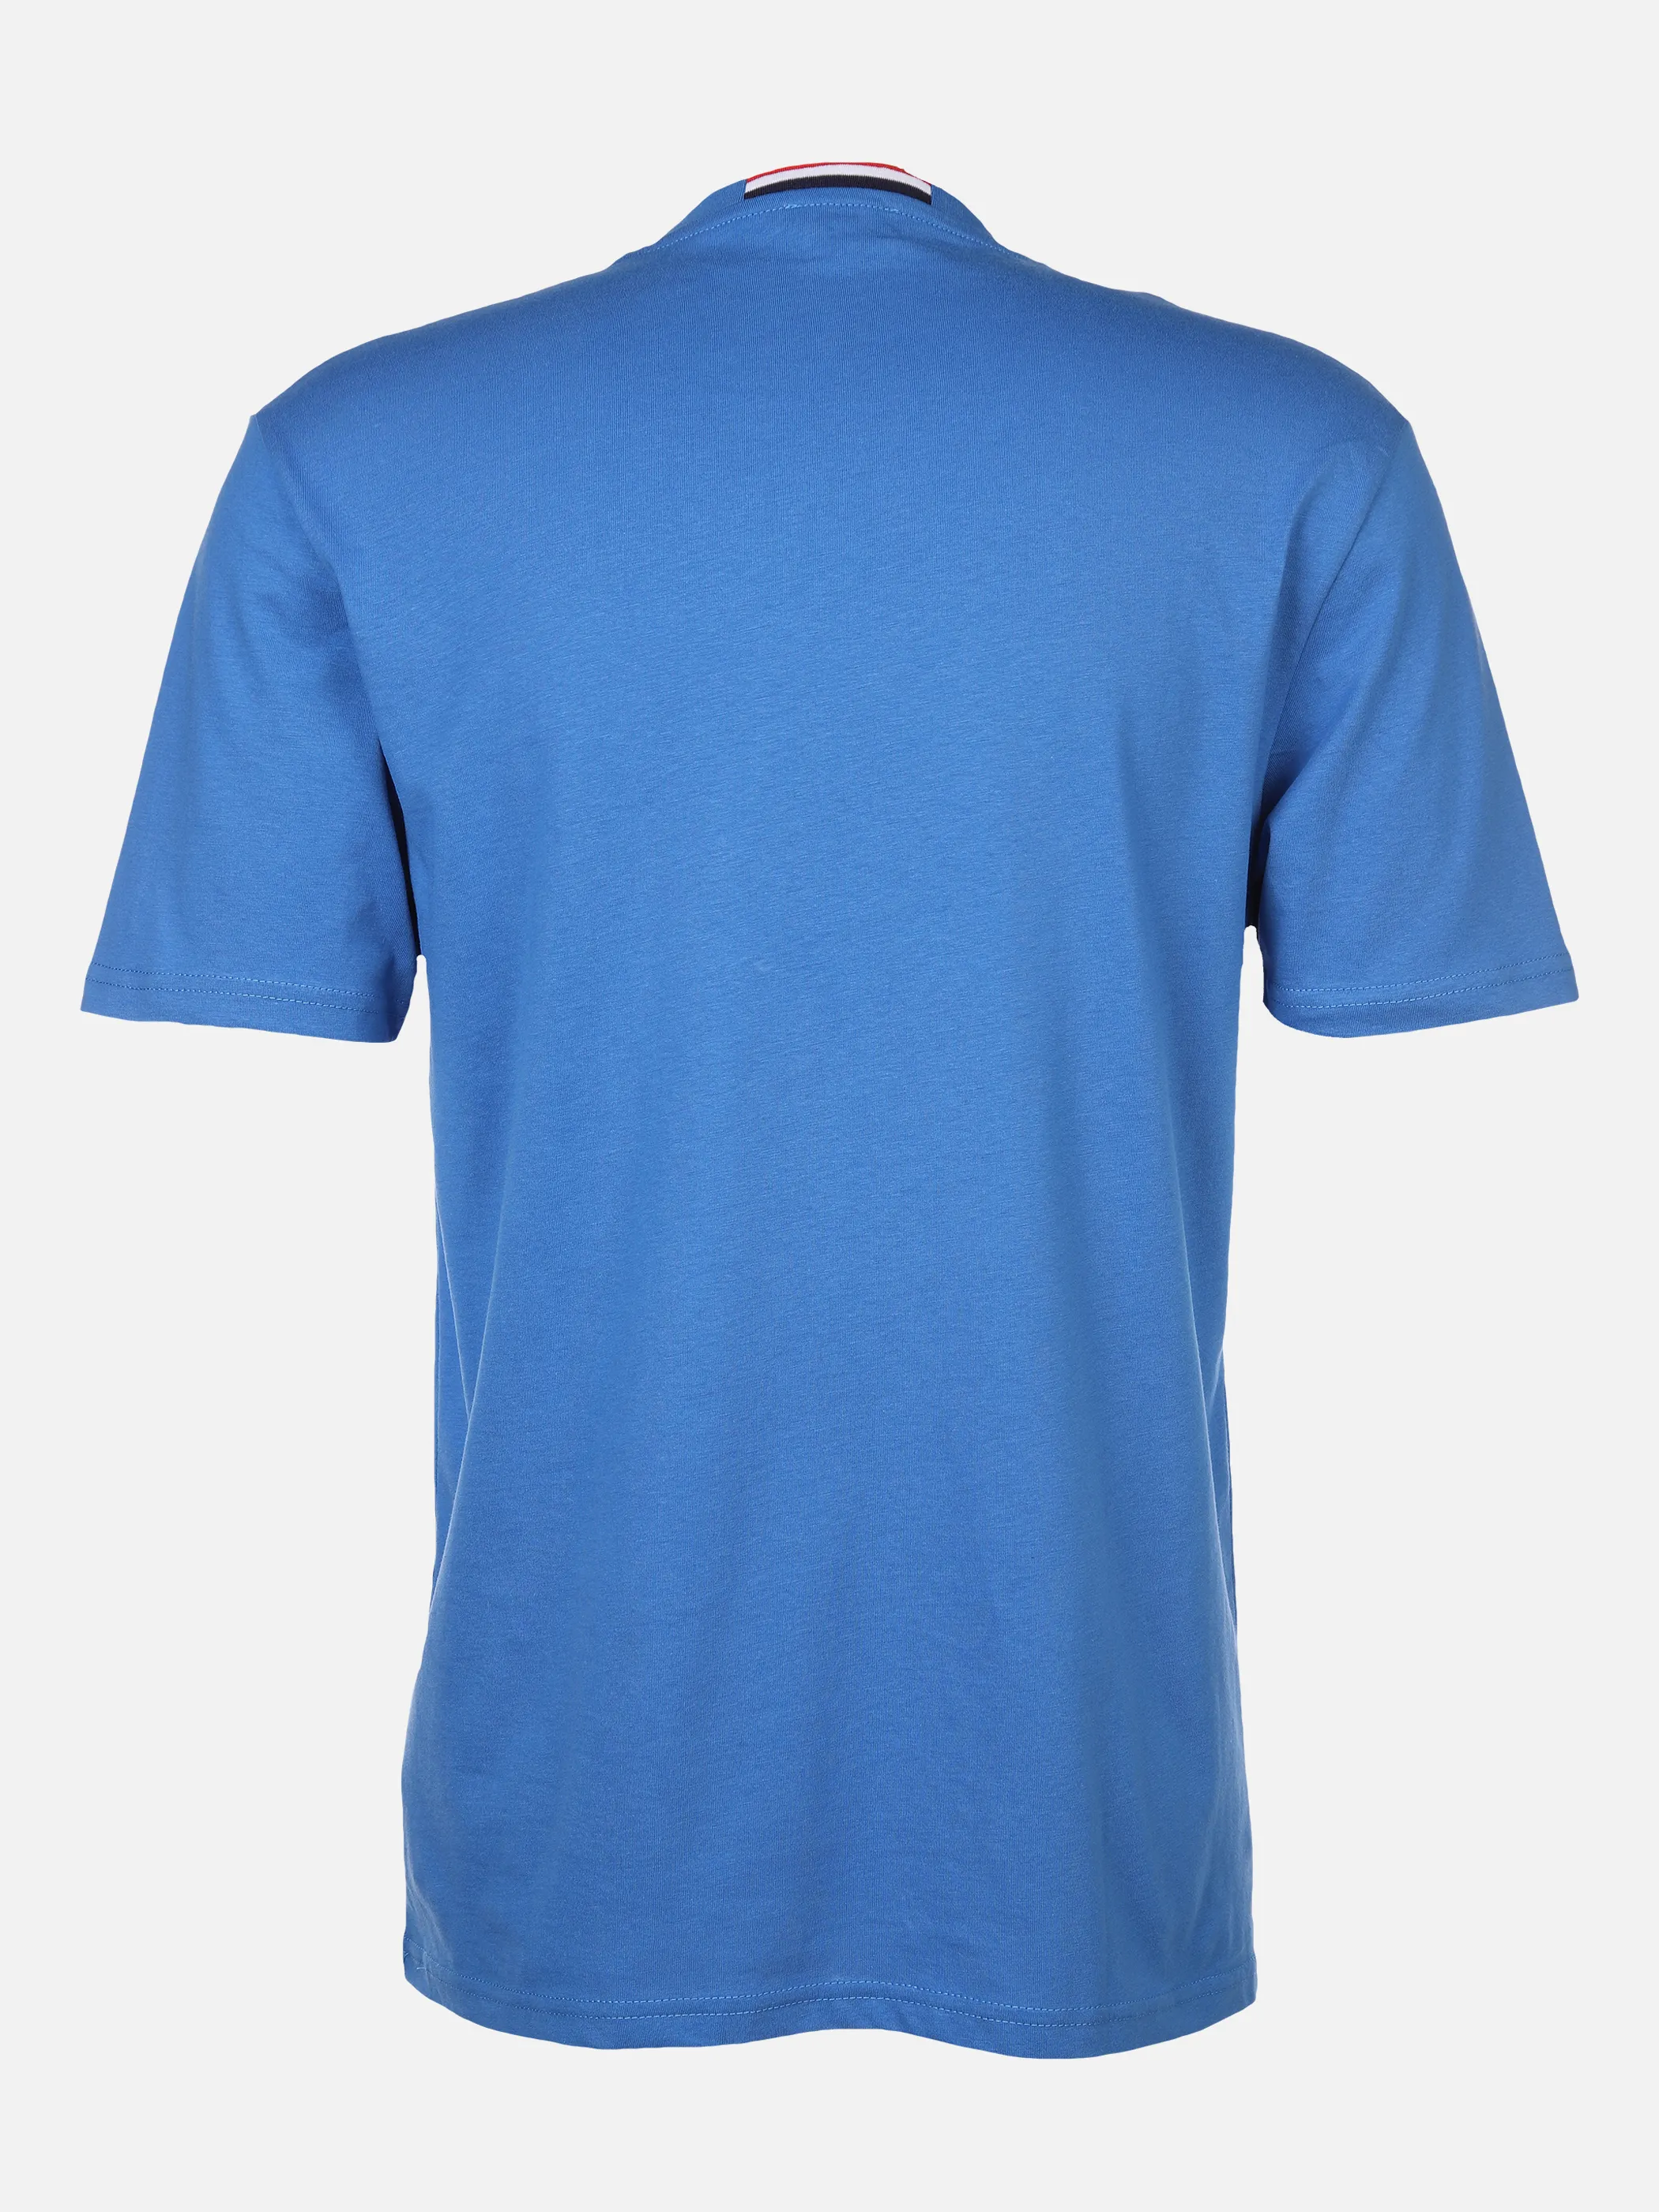 U.S. Polo Assn. He. T-Shirt 1/2 Arm Logostickerei Blau 882065 BLUE 2